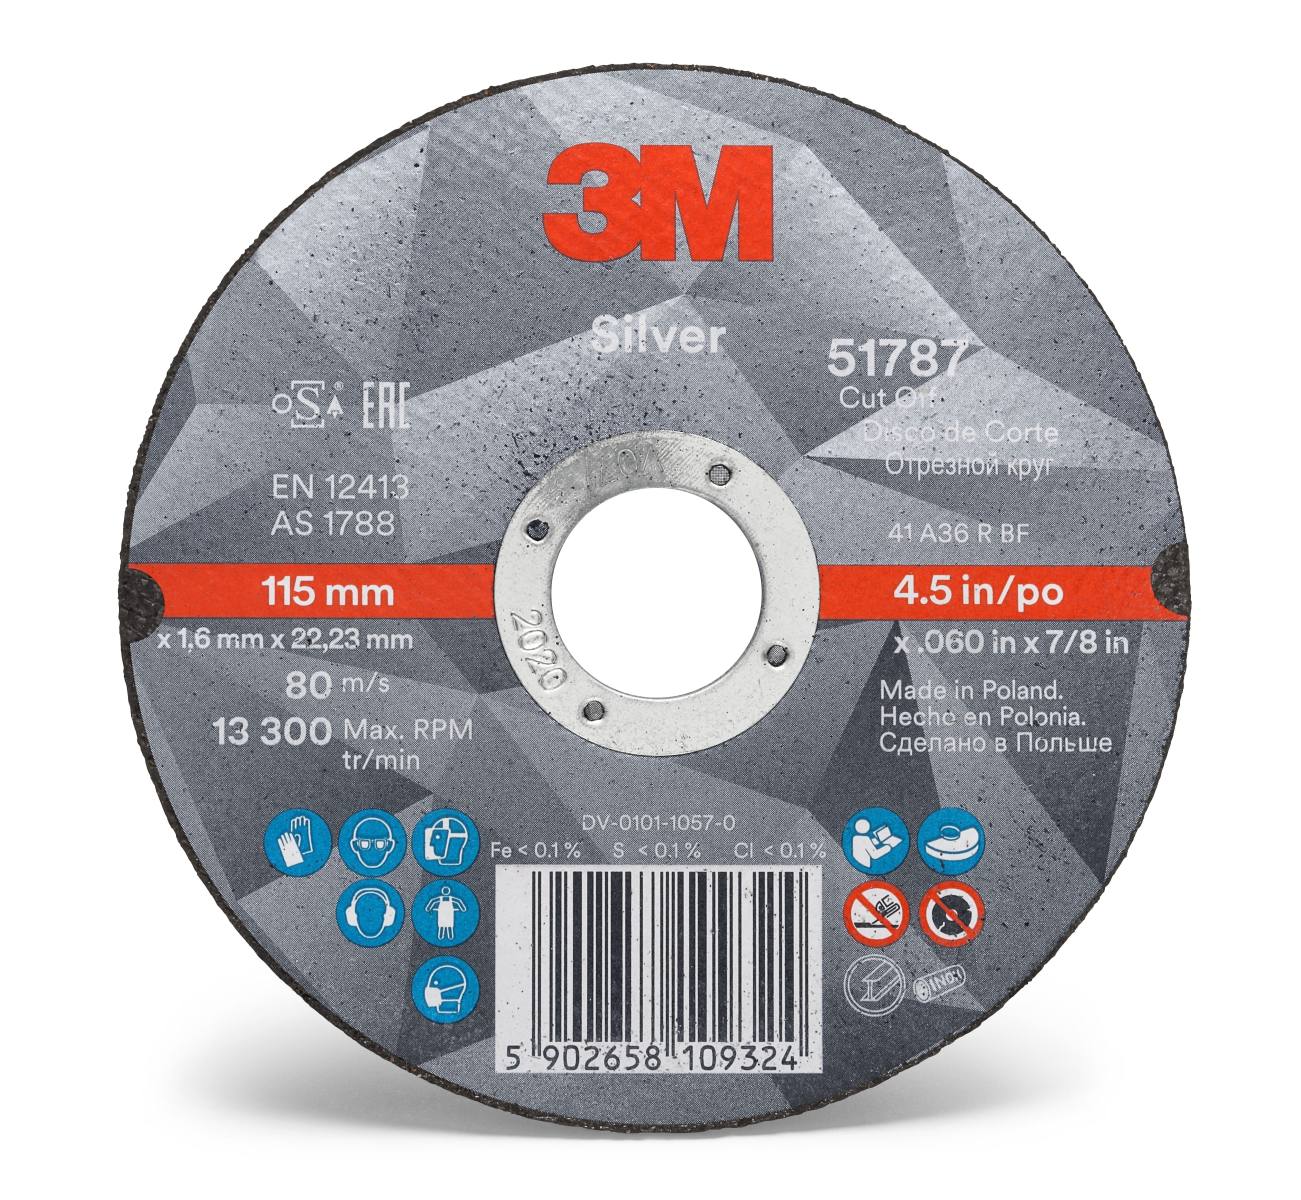 3M Silver Cut-Off Wheel Trennscheibe, 125 mm, 2,5 mm, 22,23 mm, T42, 51801